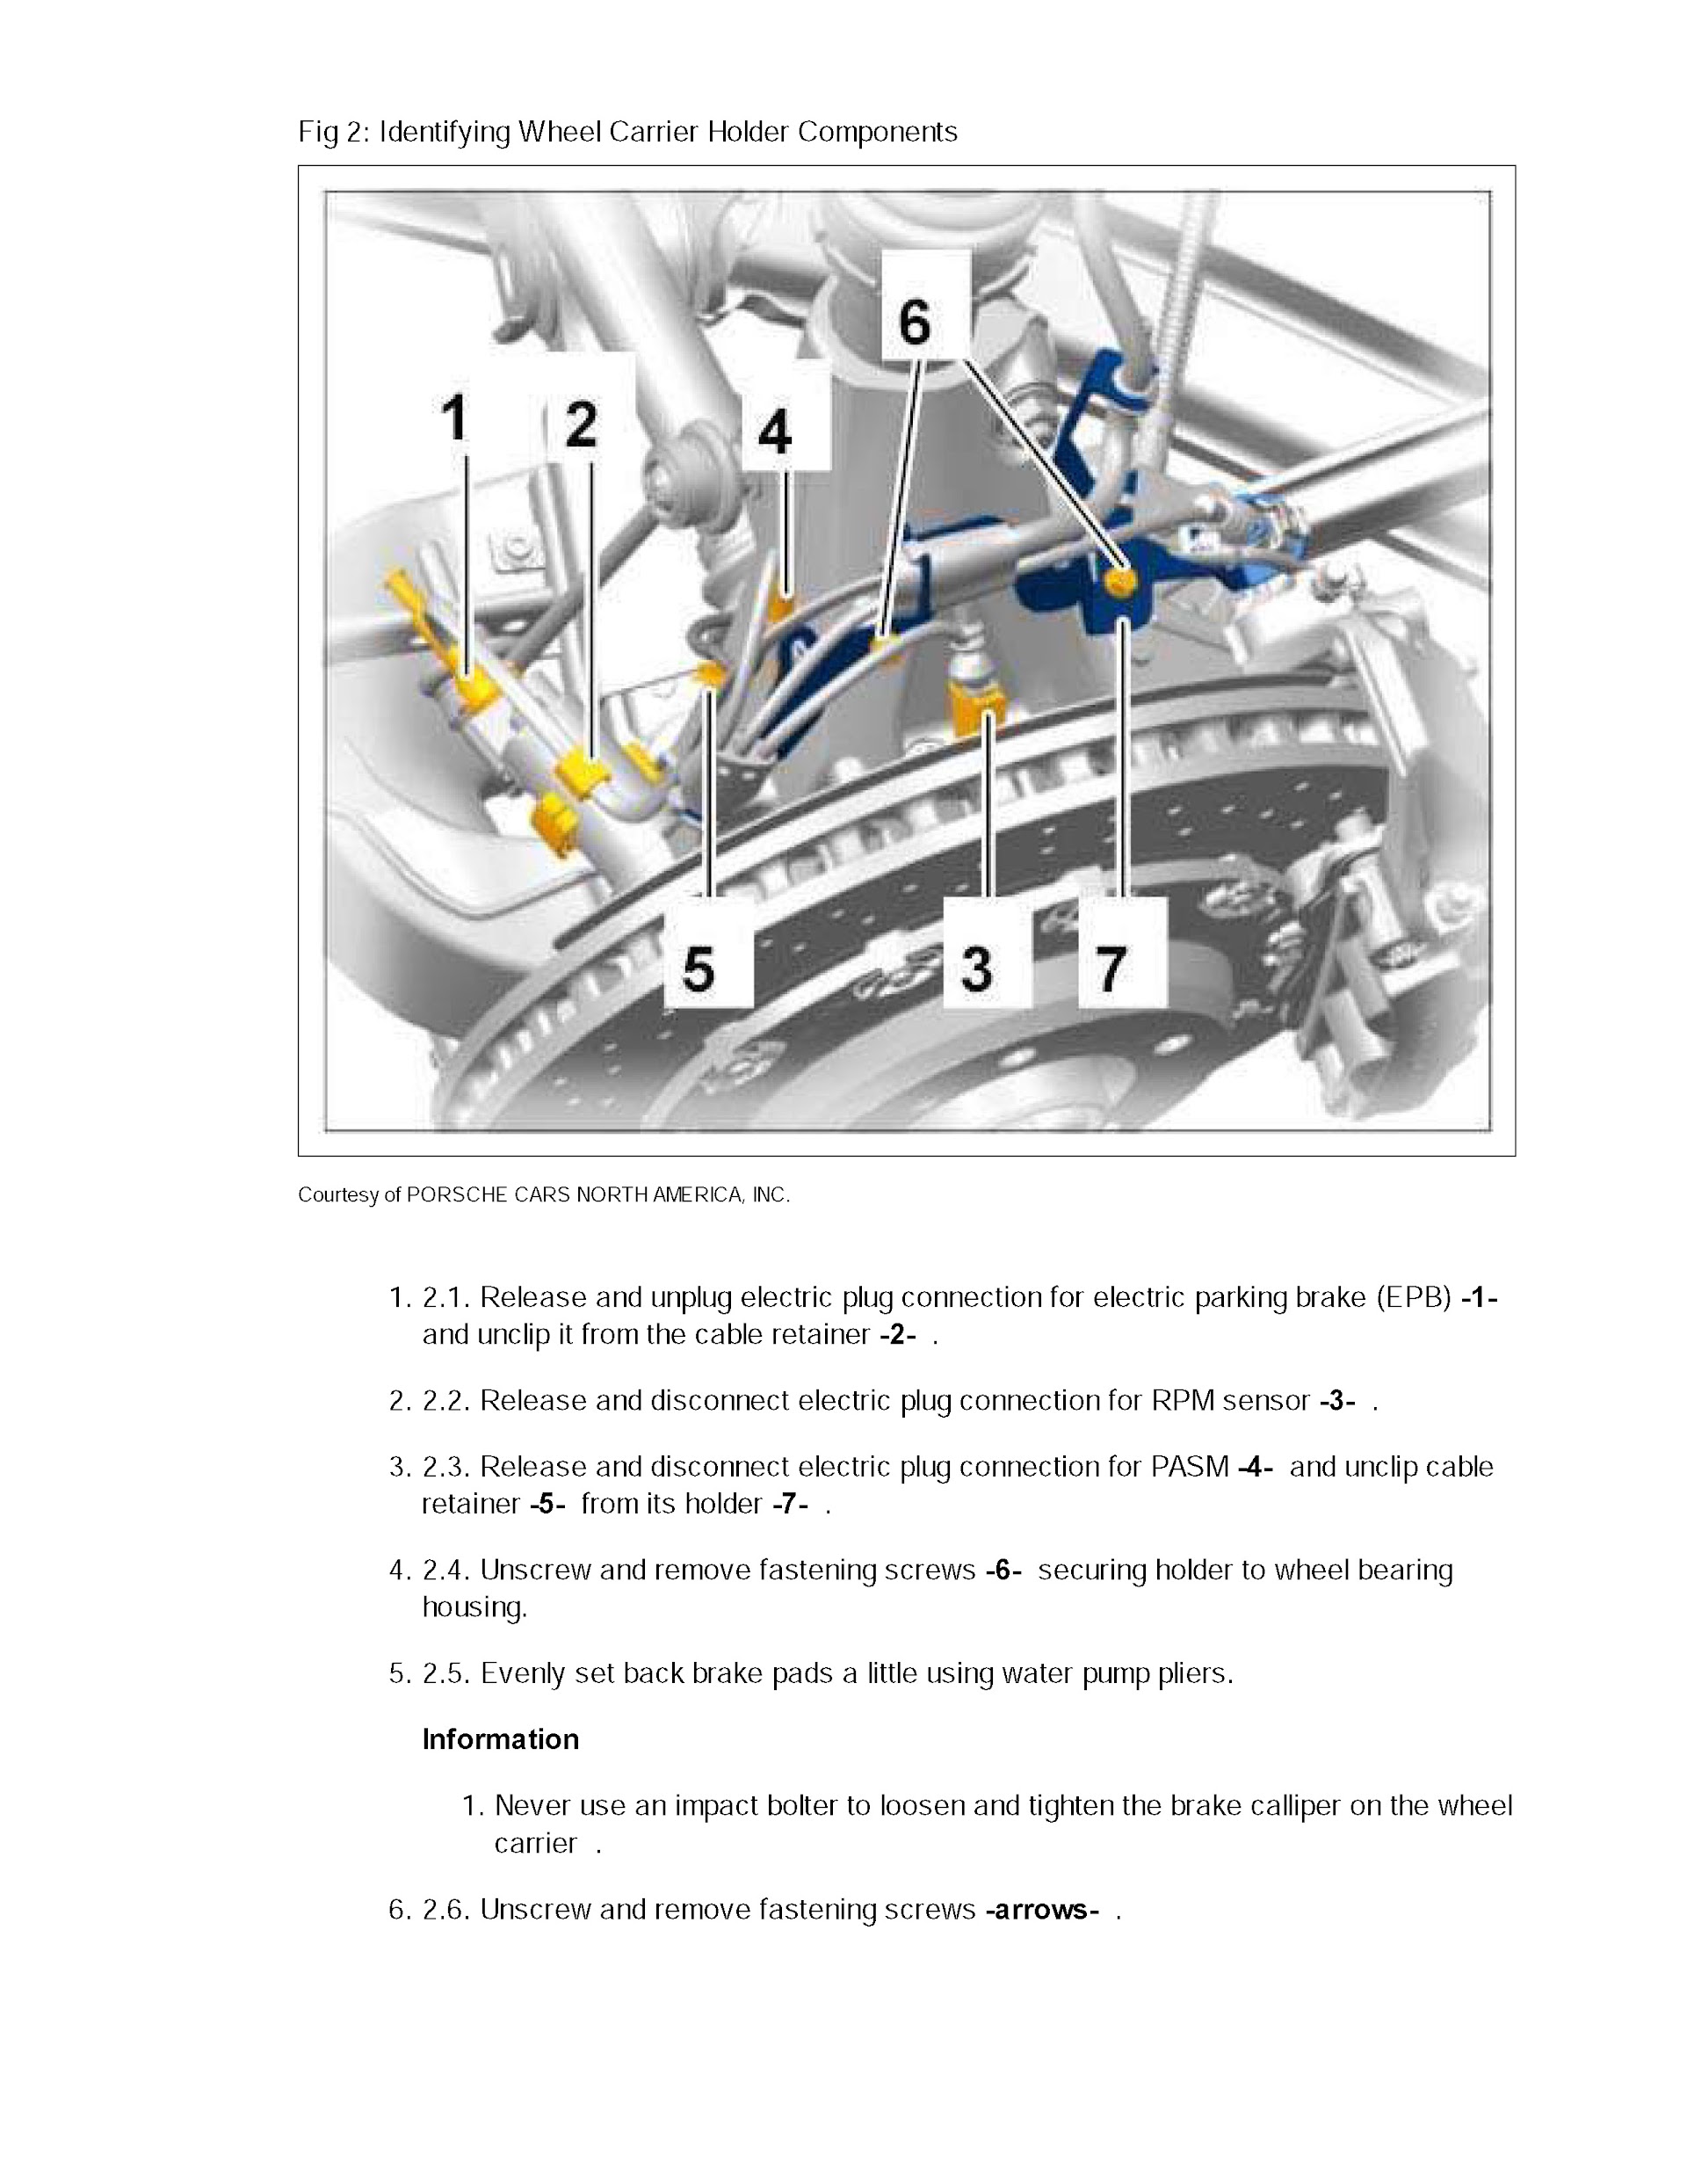 2016 Porsche Boxster Repair Manual, Wheel Carrier Holder Components